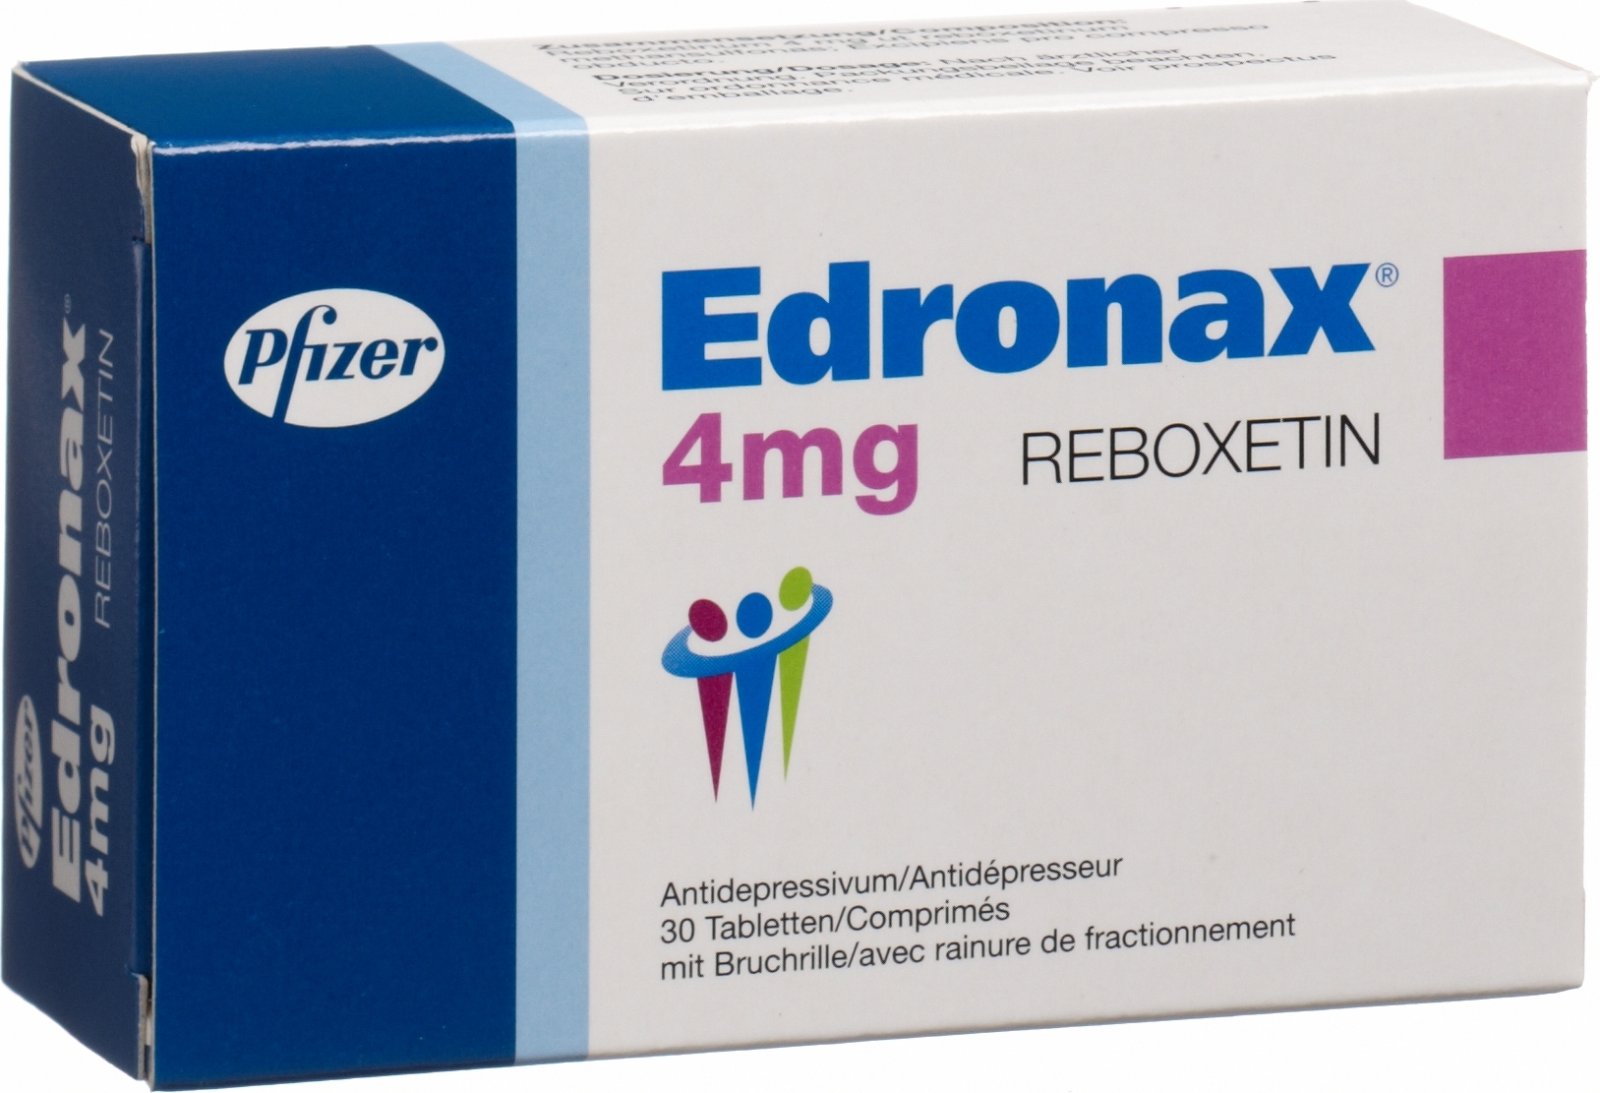 Edronax Tabletten 4mg 30 Stuck In Der Adler Apotheke